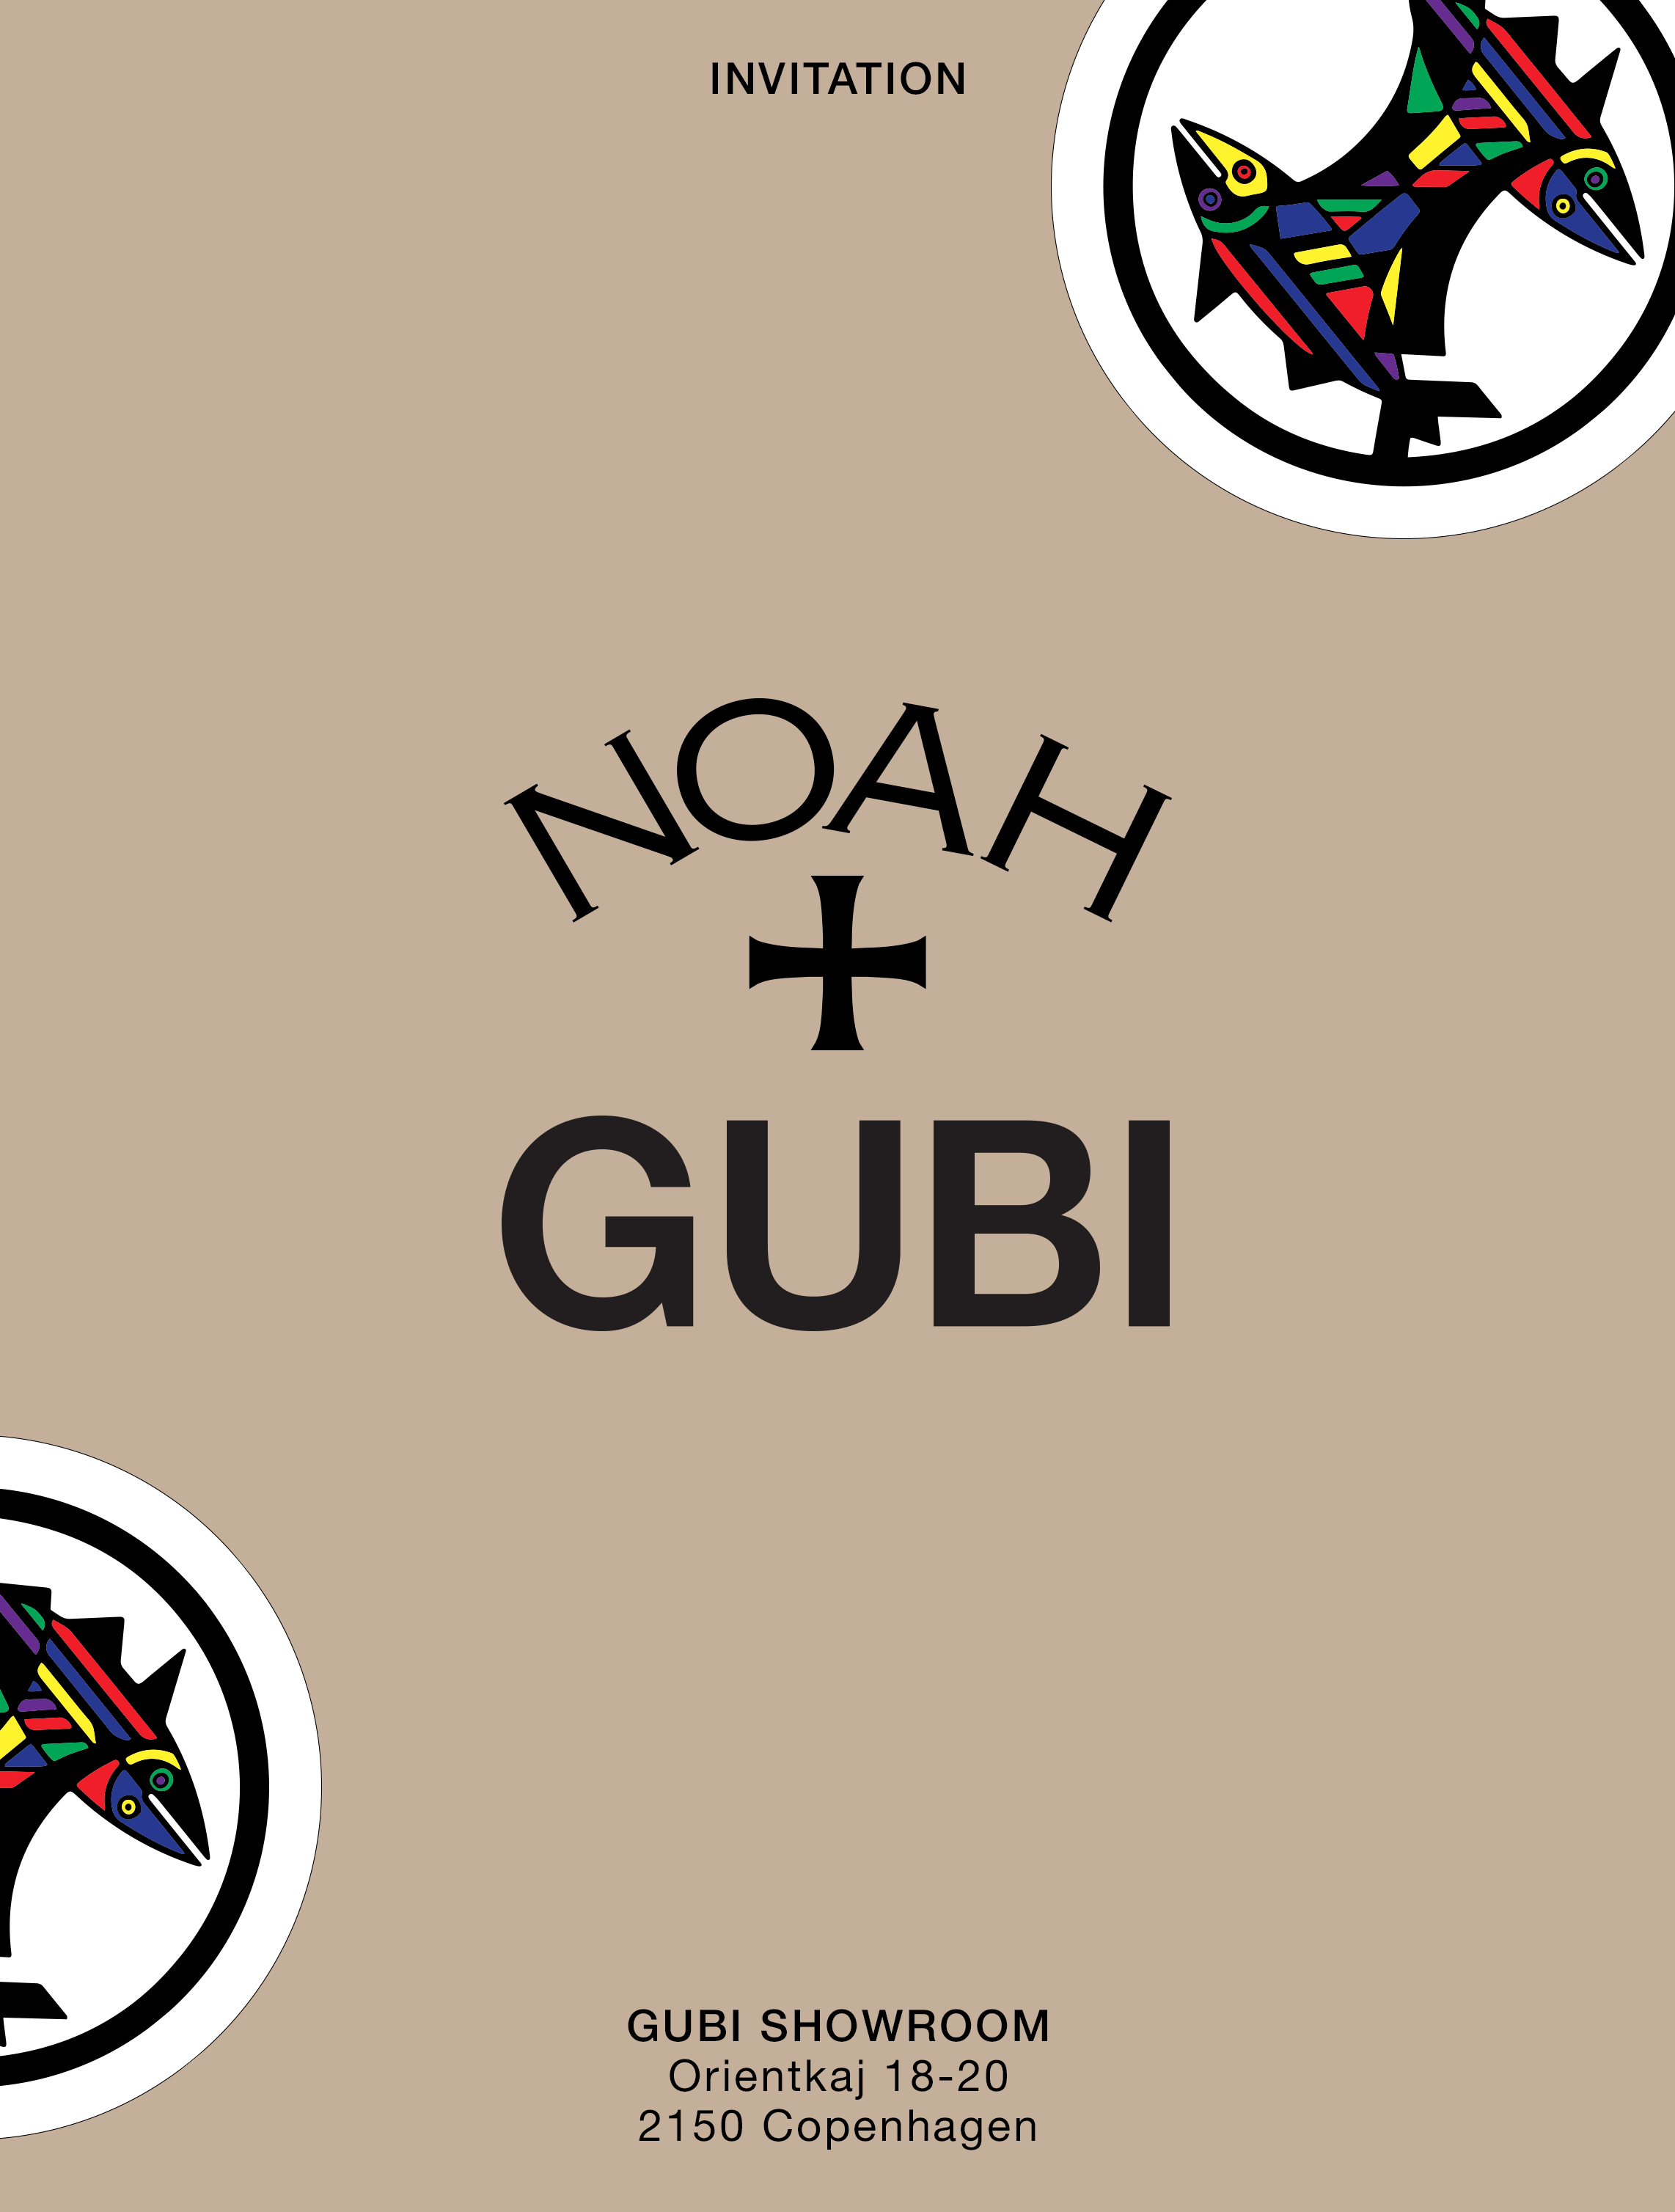 GUBI x Noah, een unieke samenwerking met dit New Yorkse kledingmerk